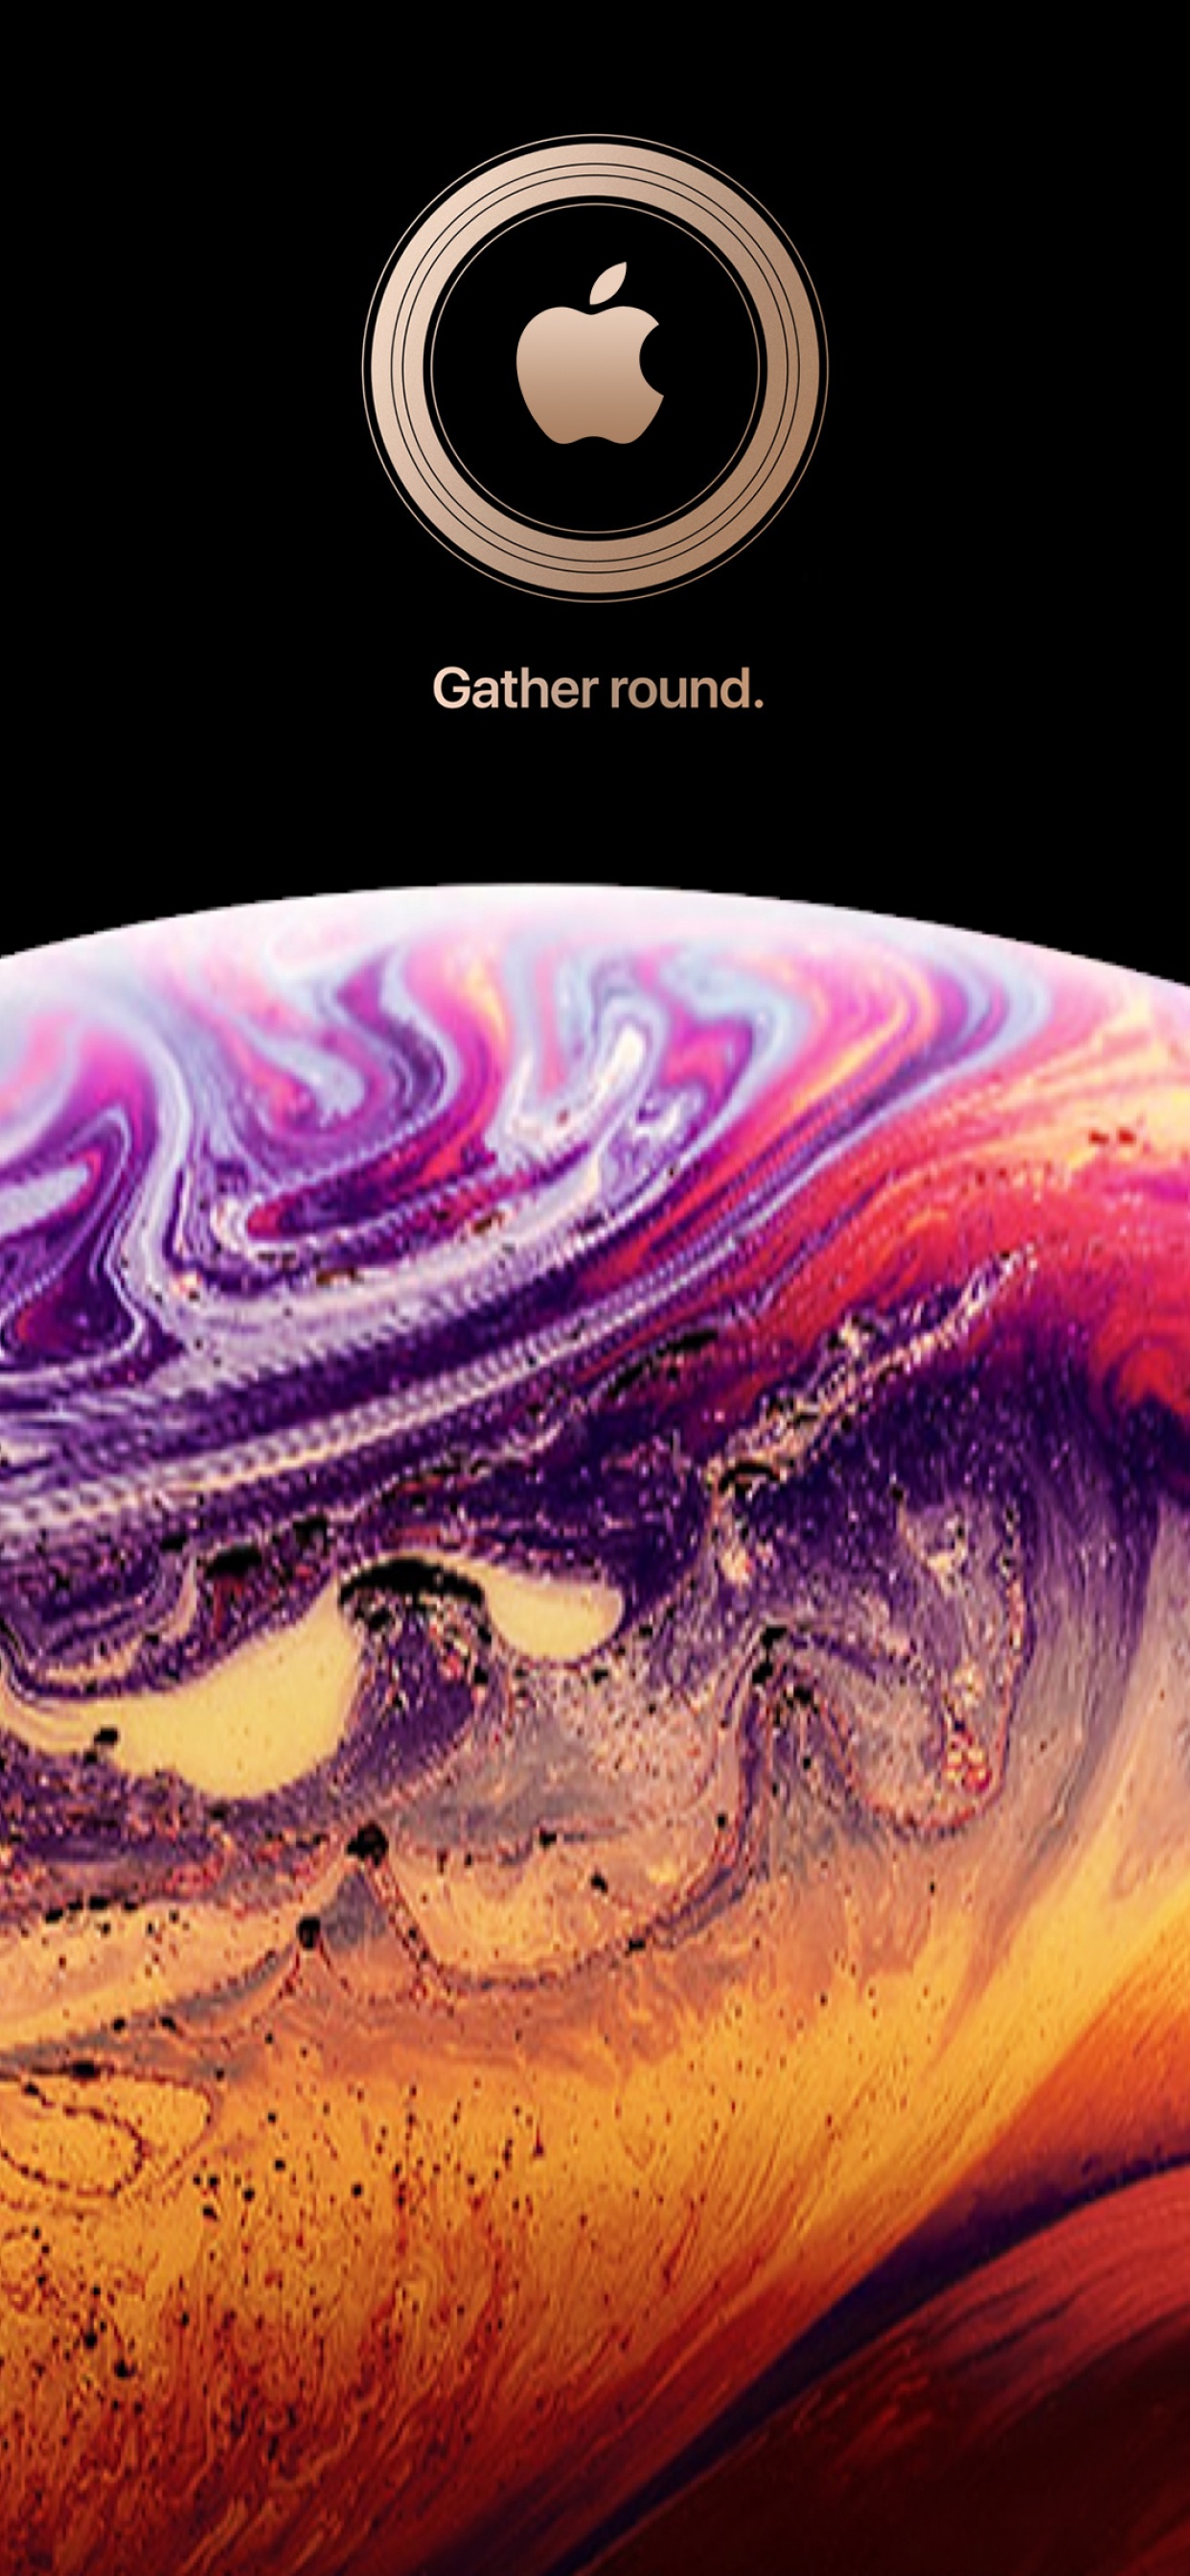 iOS 12 4K Wallpaper, iPhone XS, Stock, Black background, Technology, #1568